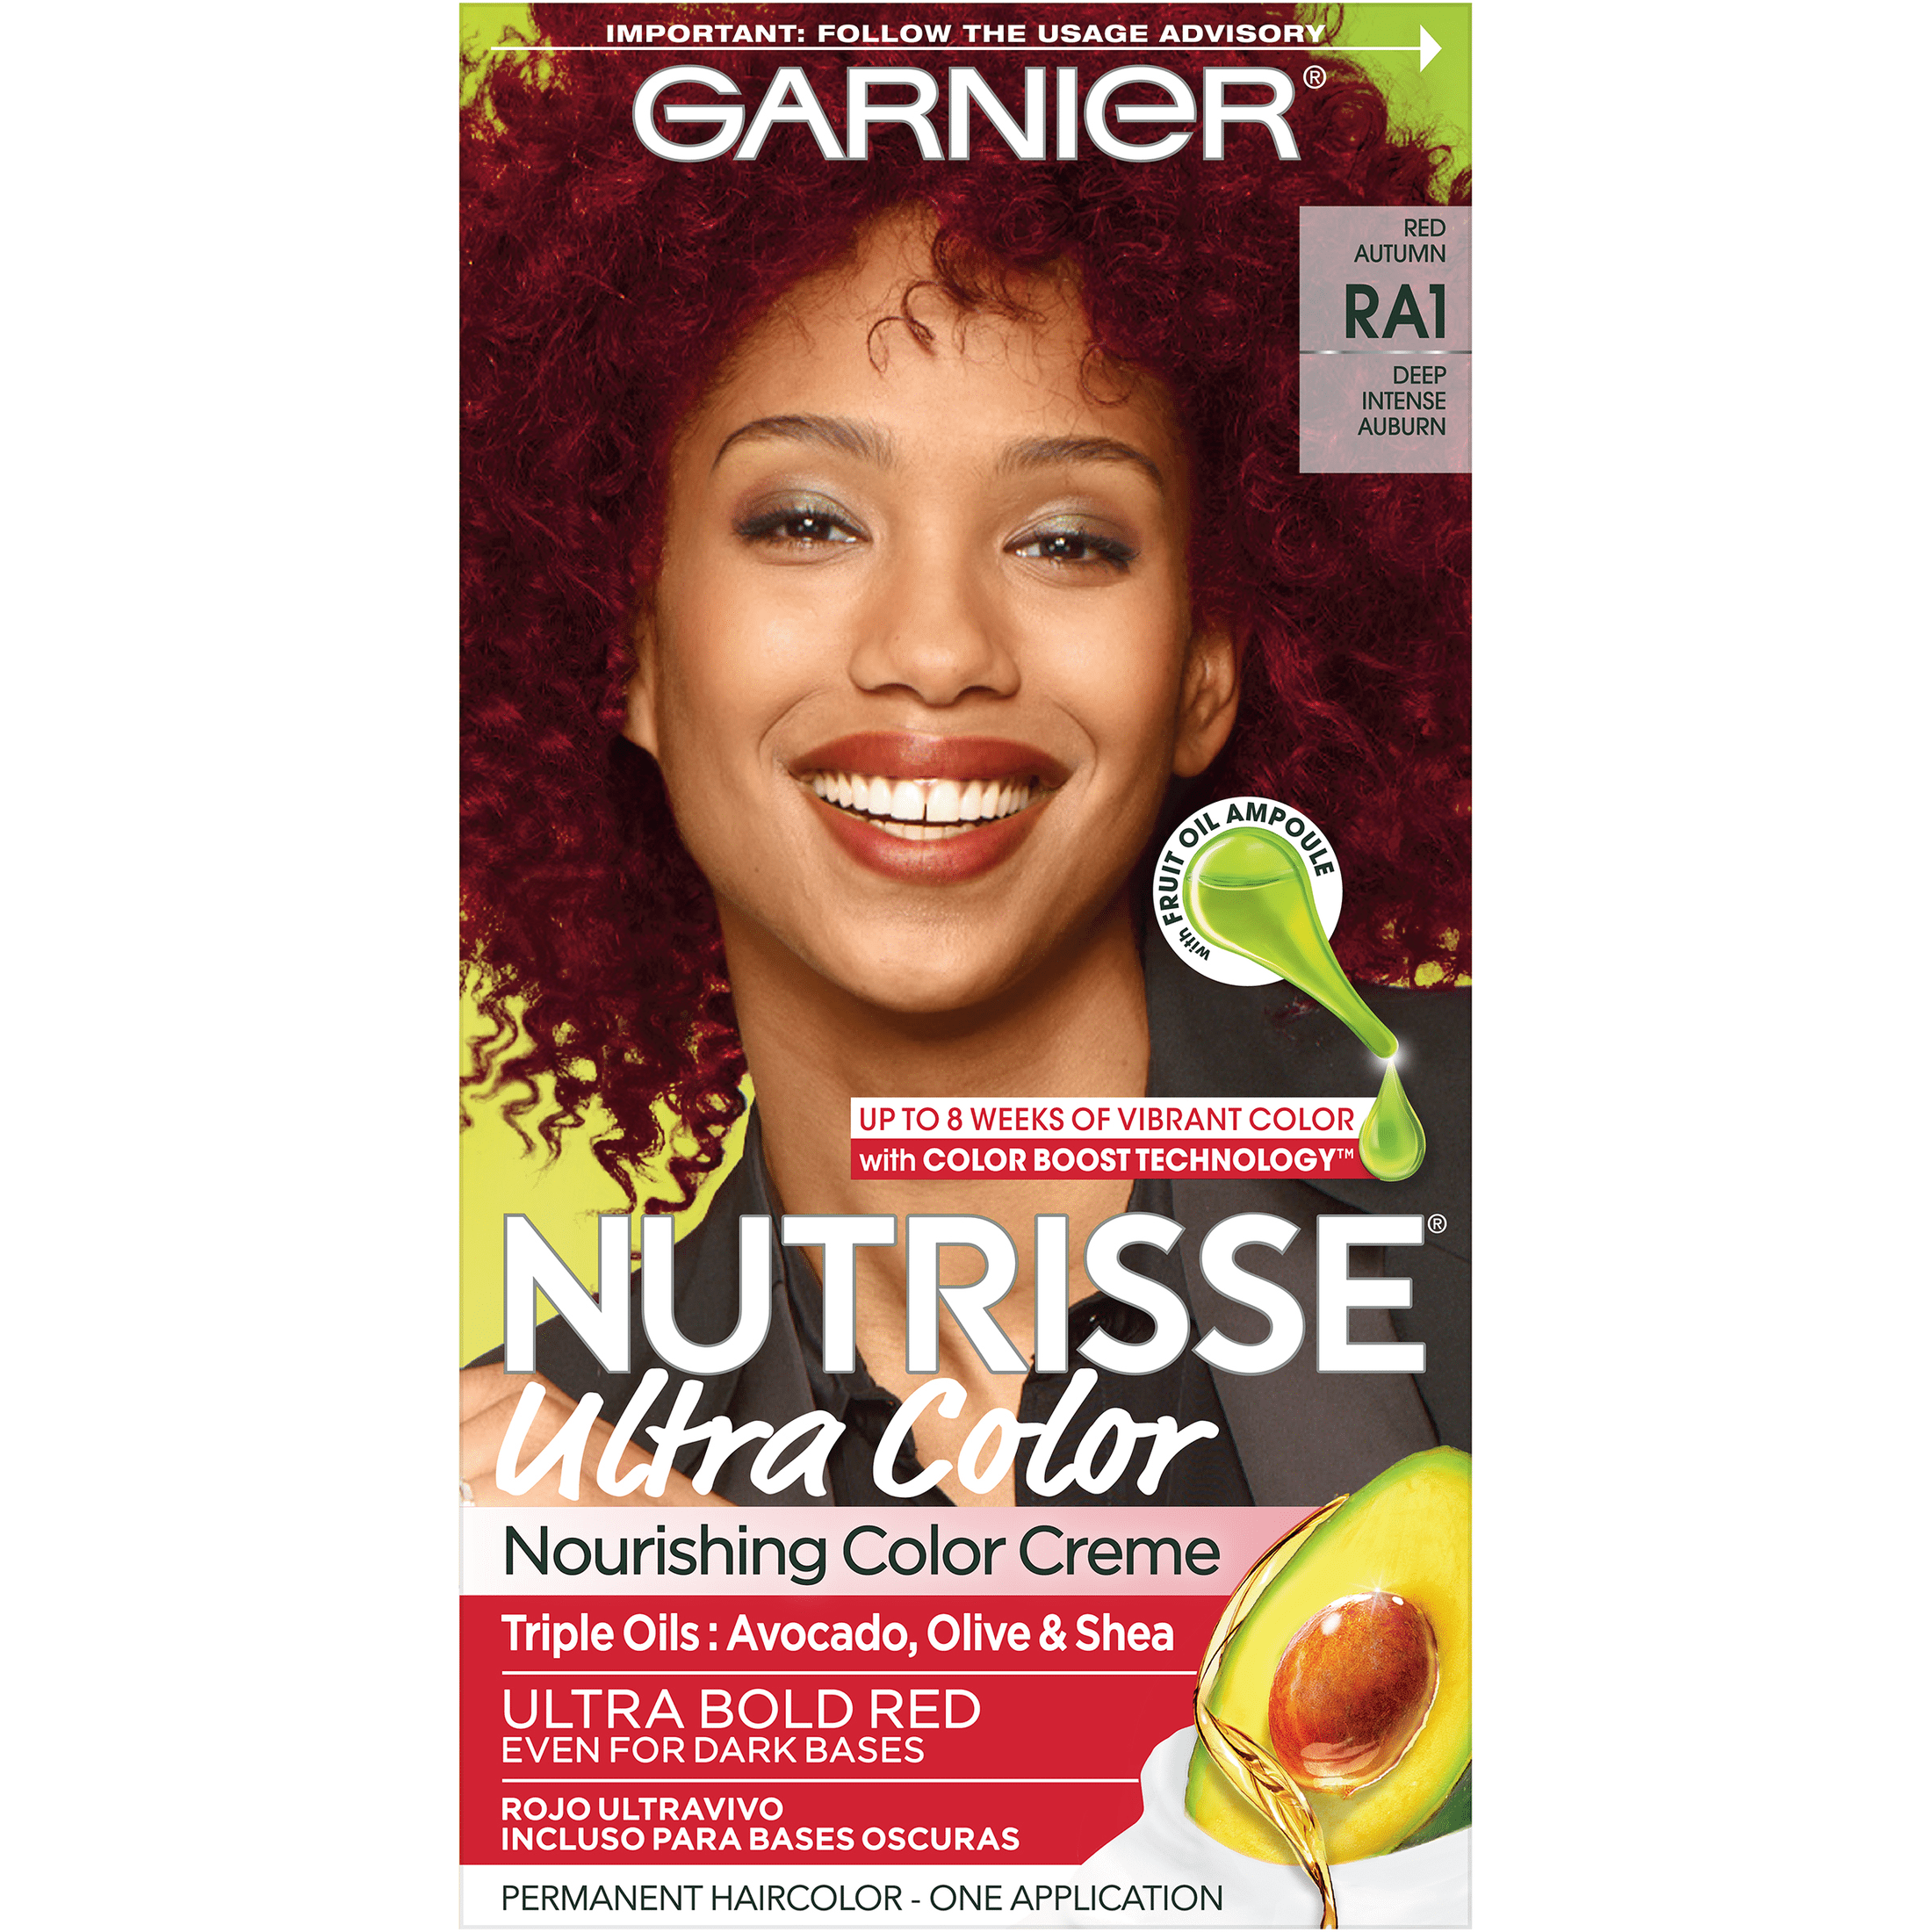 Garnier Nutrisse Nourishing Creme, RA1 Red Autumn Walmart.com